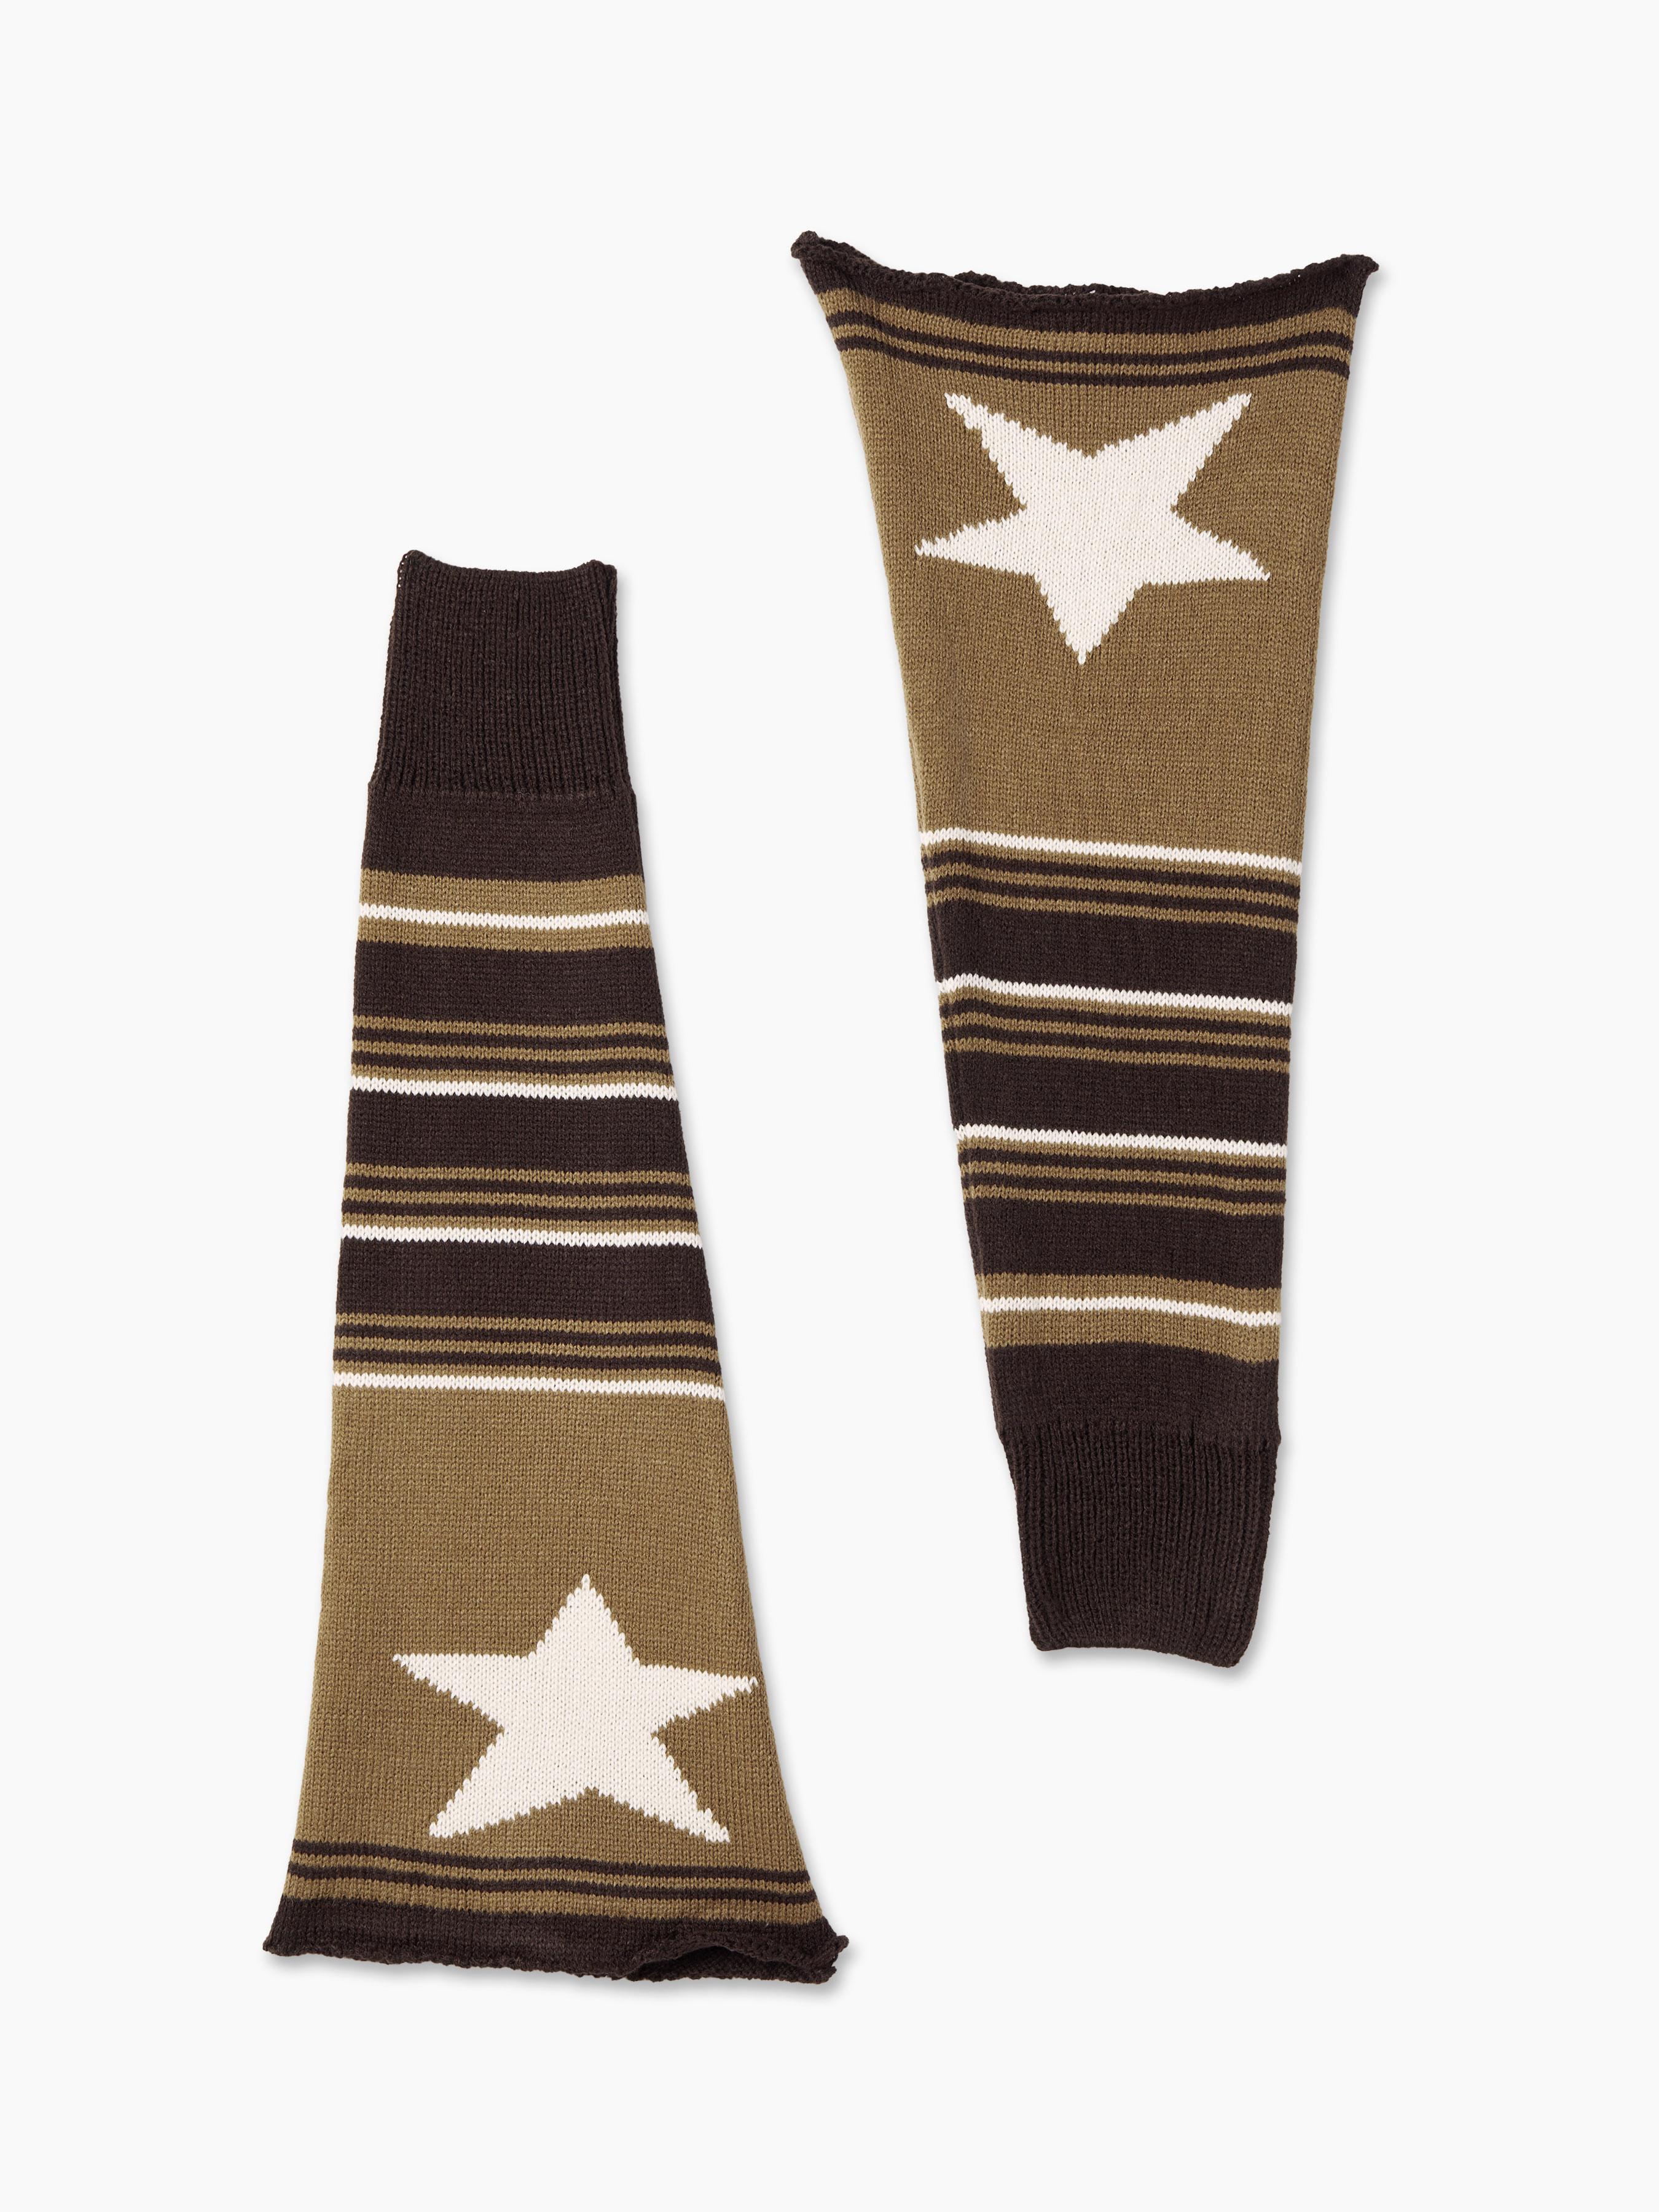 25.14]Bone and Star Decorated Striped Black Leg Warmers